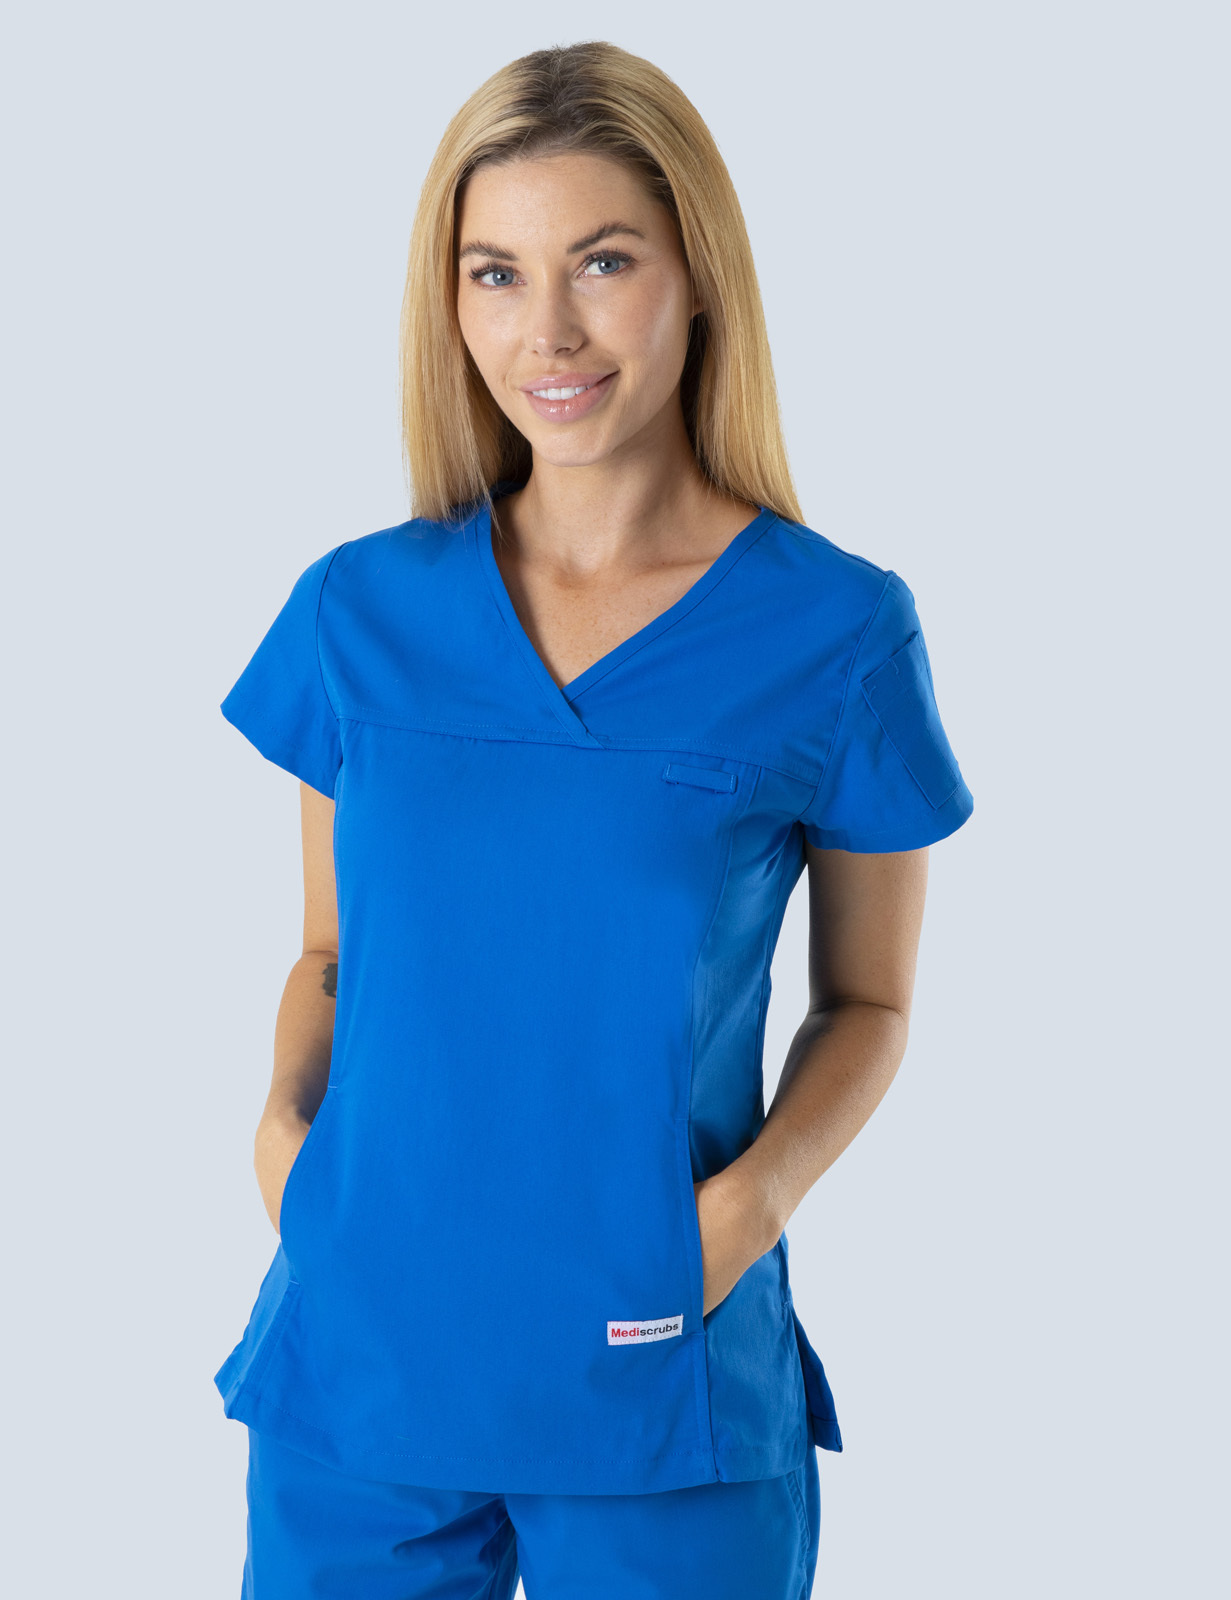 Queensland Children's Hospital Emergency Department Assistant in Nursing  Uniform Top Bundle  (Women's Fit Top in Royal incl Logos)